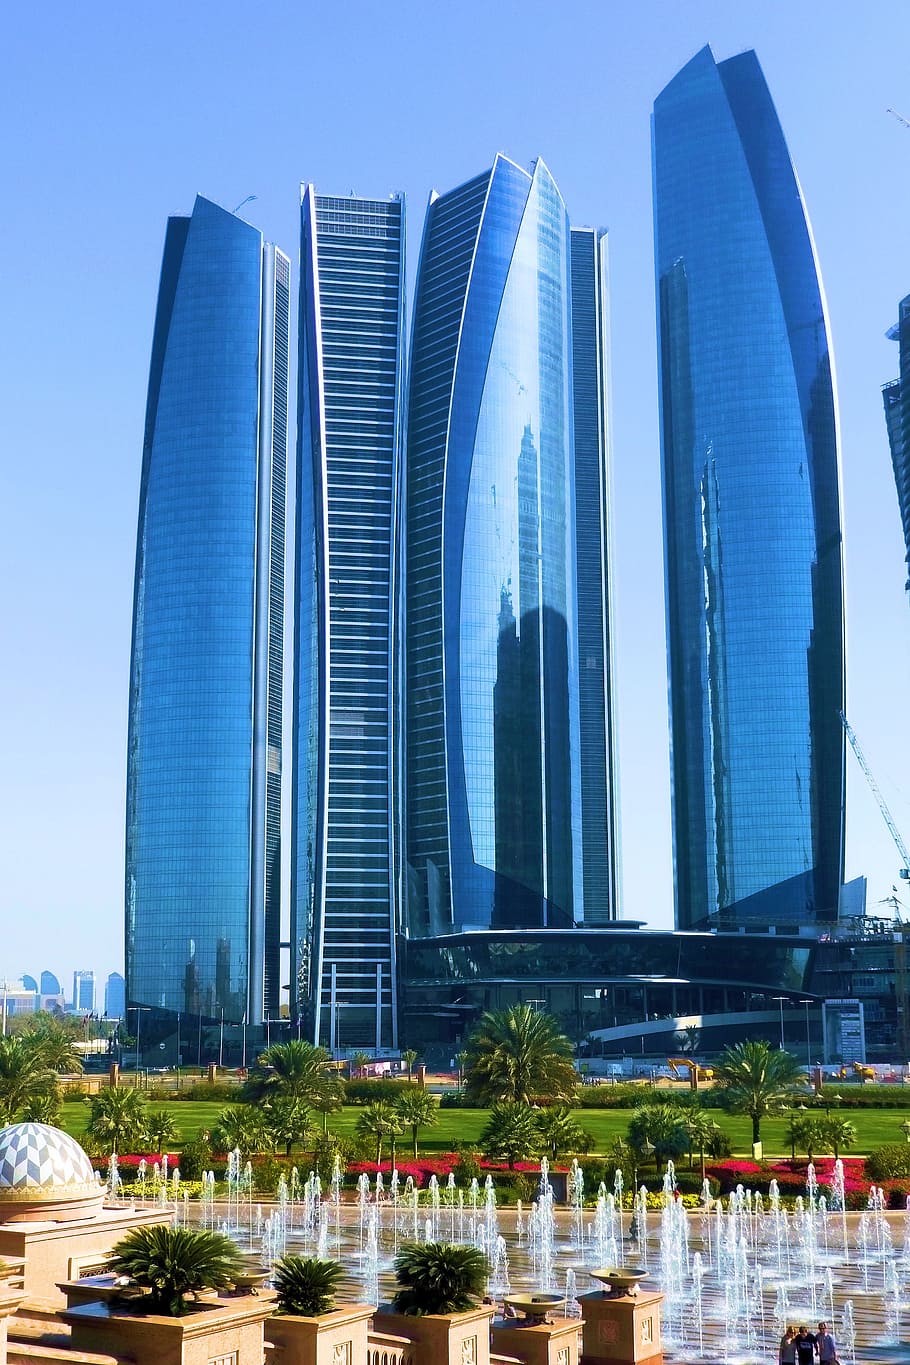 empat, kota, gedung tinggi, bangunan, Menara Etihad, Abu Dhabi, Pencakar Langit, arsitektur, modern, Adegan perkotaan